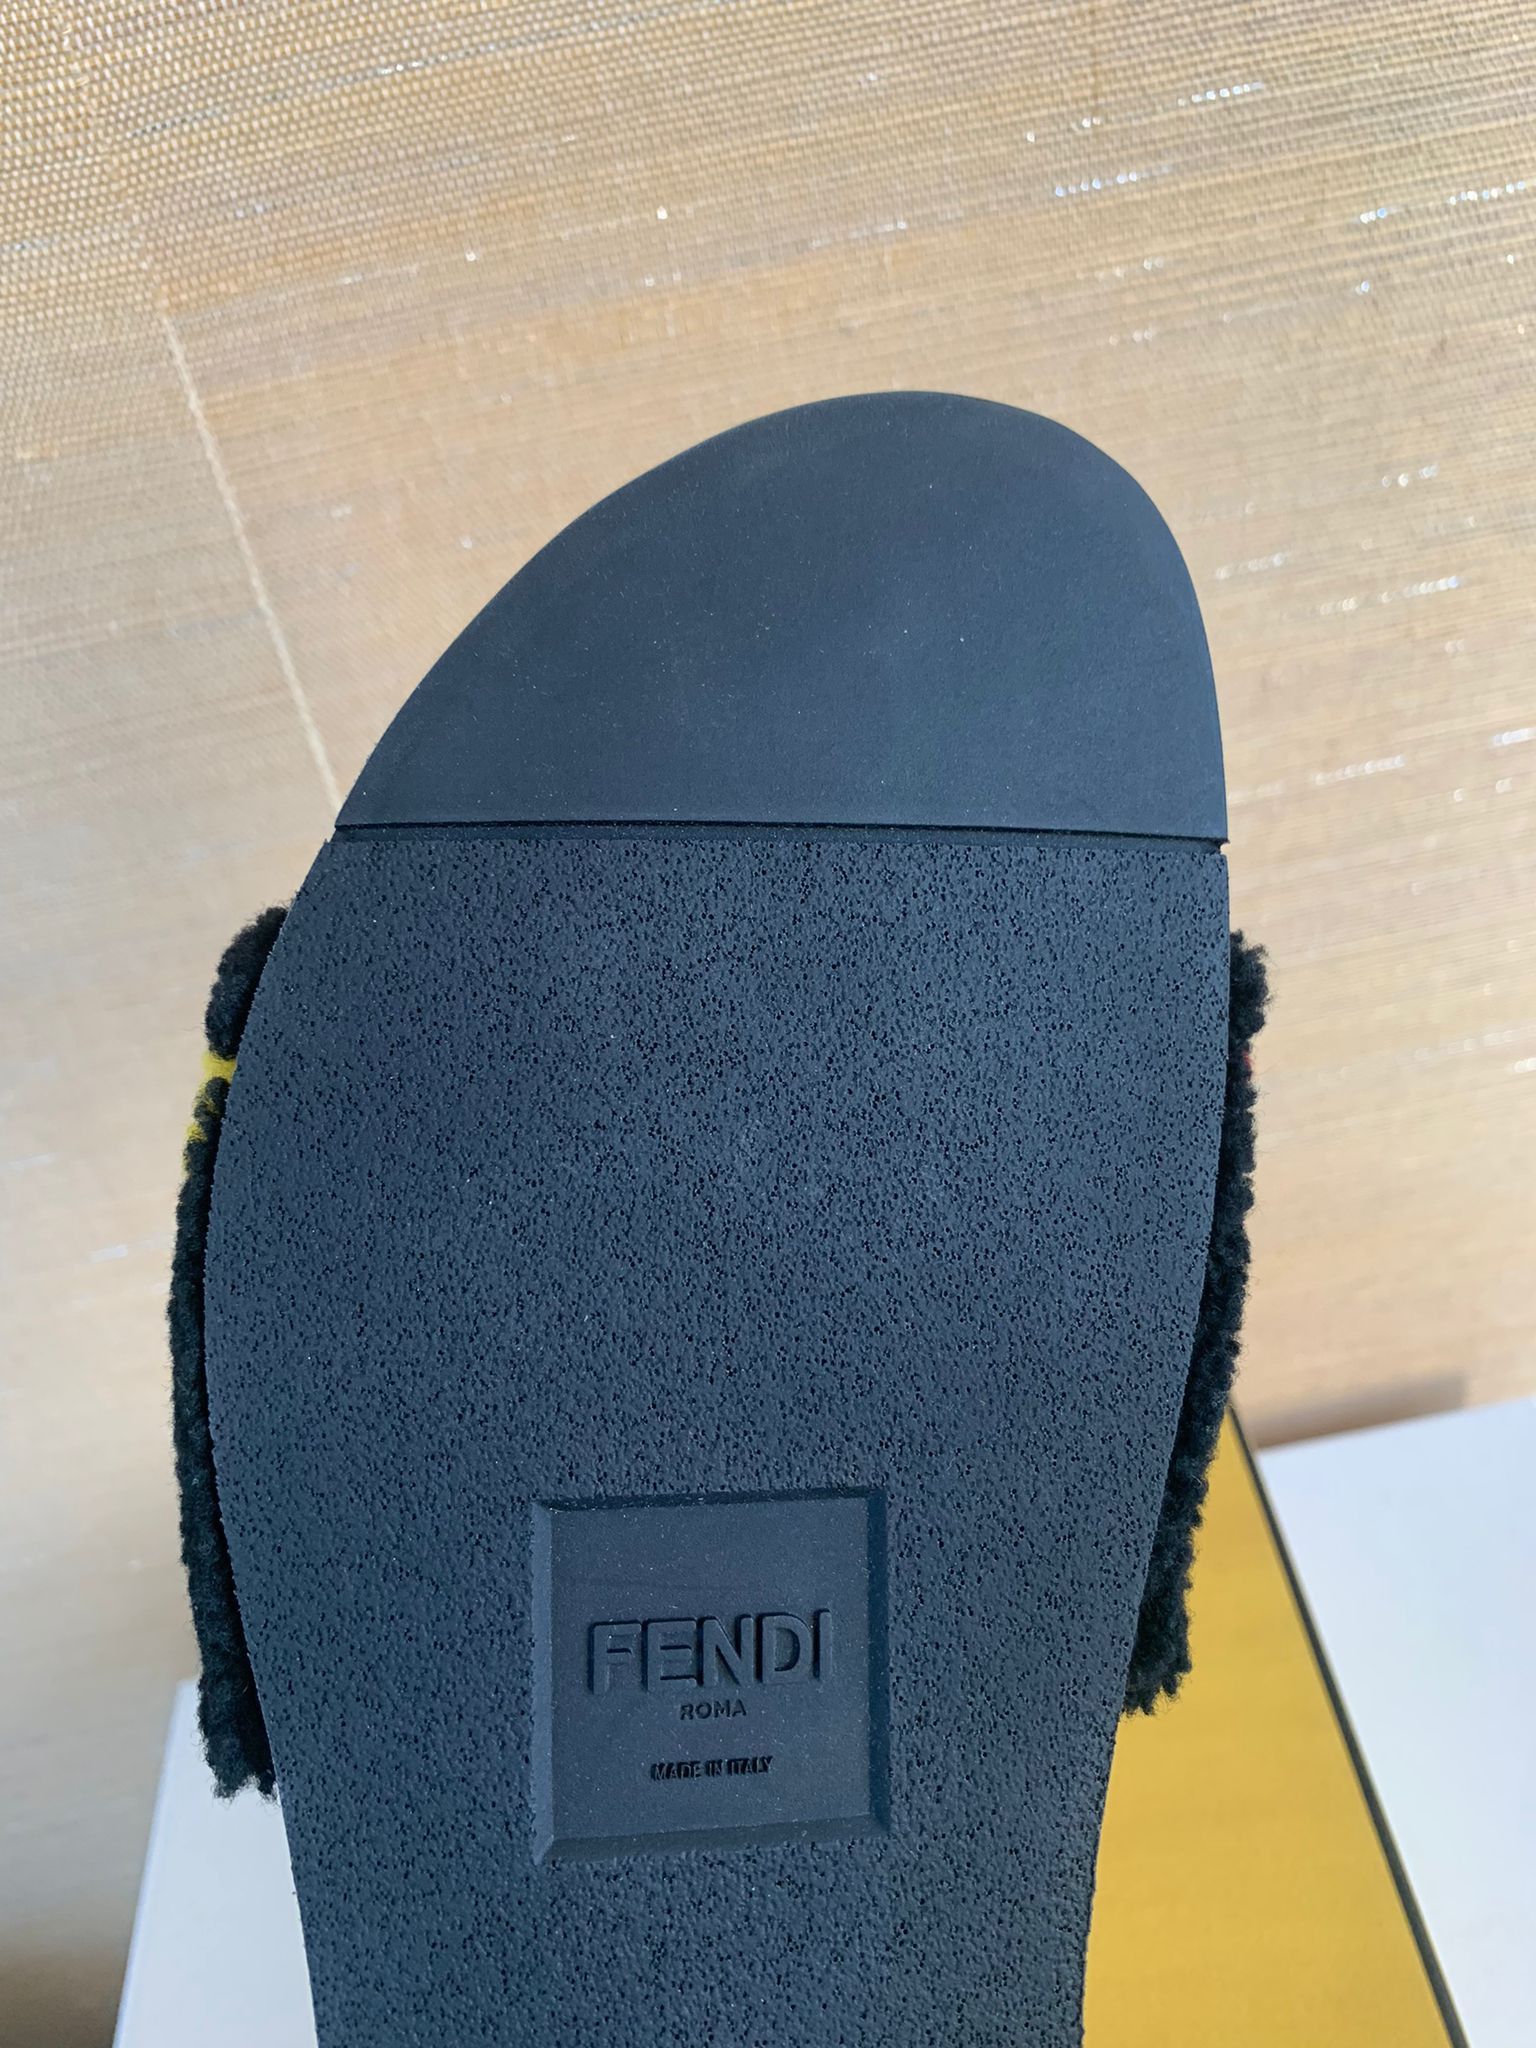 Fendi Logo Sandals in Multicolor Size US 6.5 / EU 39-40 - 8 Preview